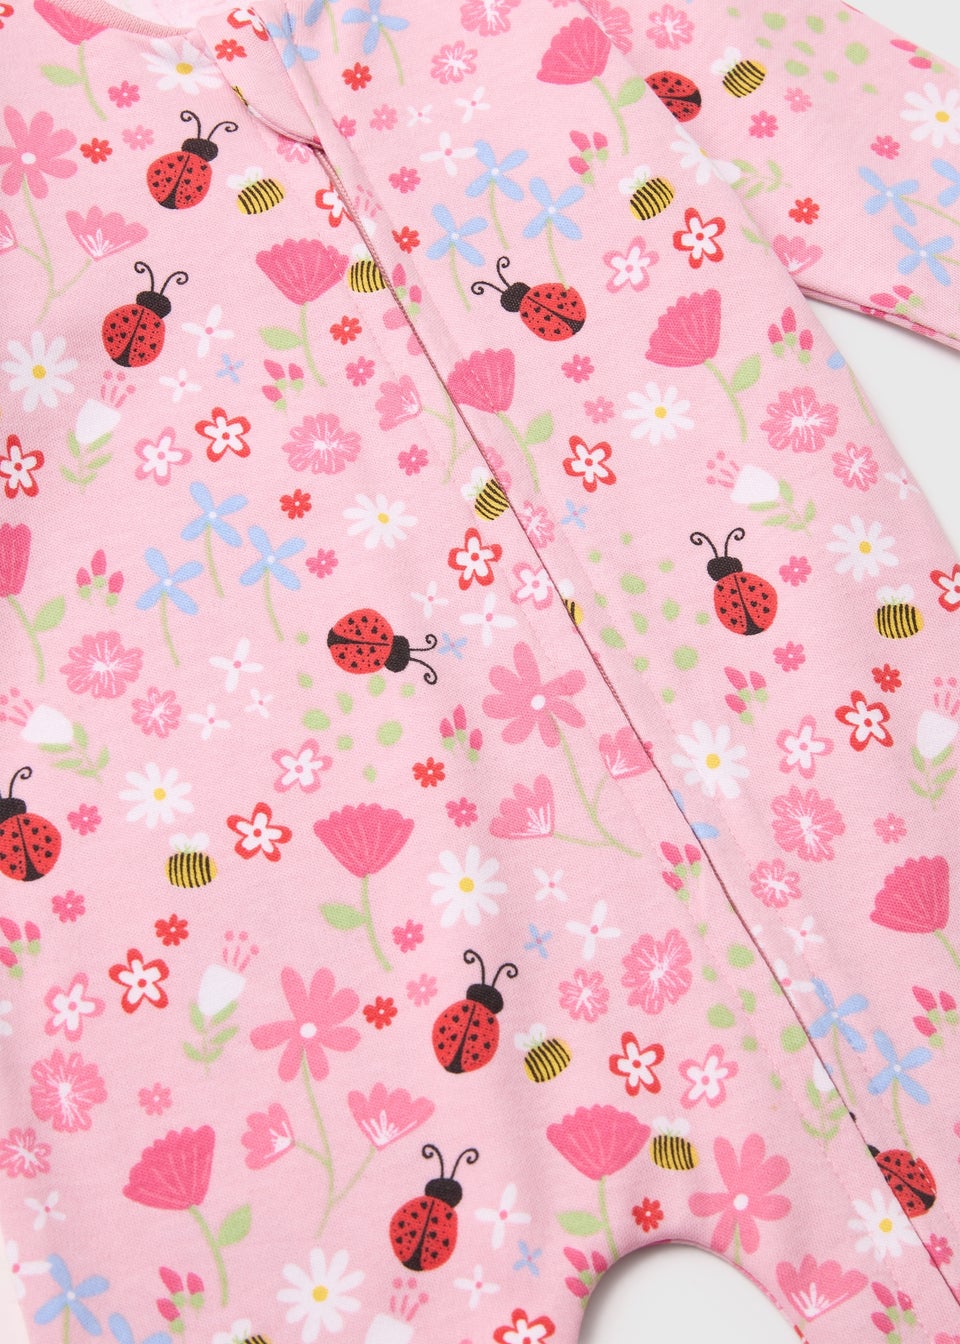 Baby Pink Floral Zipped Sleepsuit (Newborn-18mths)